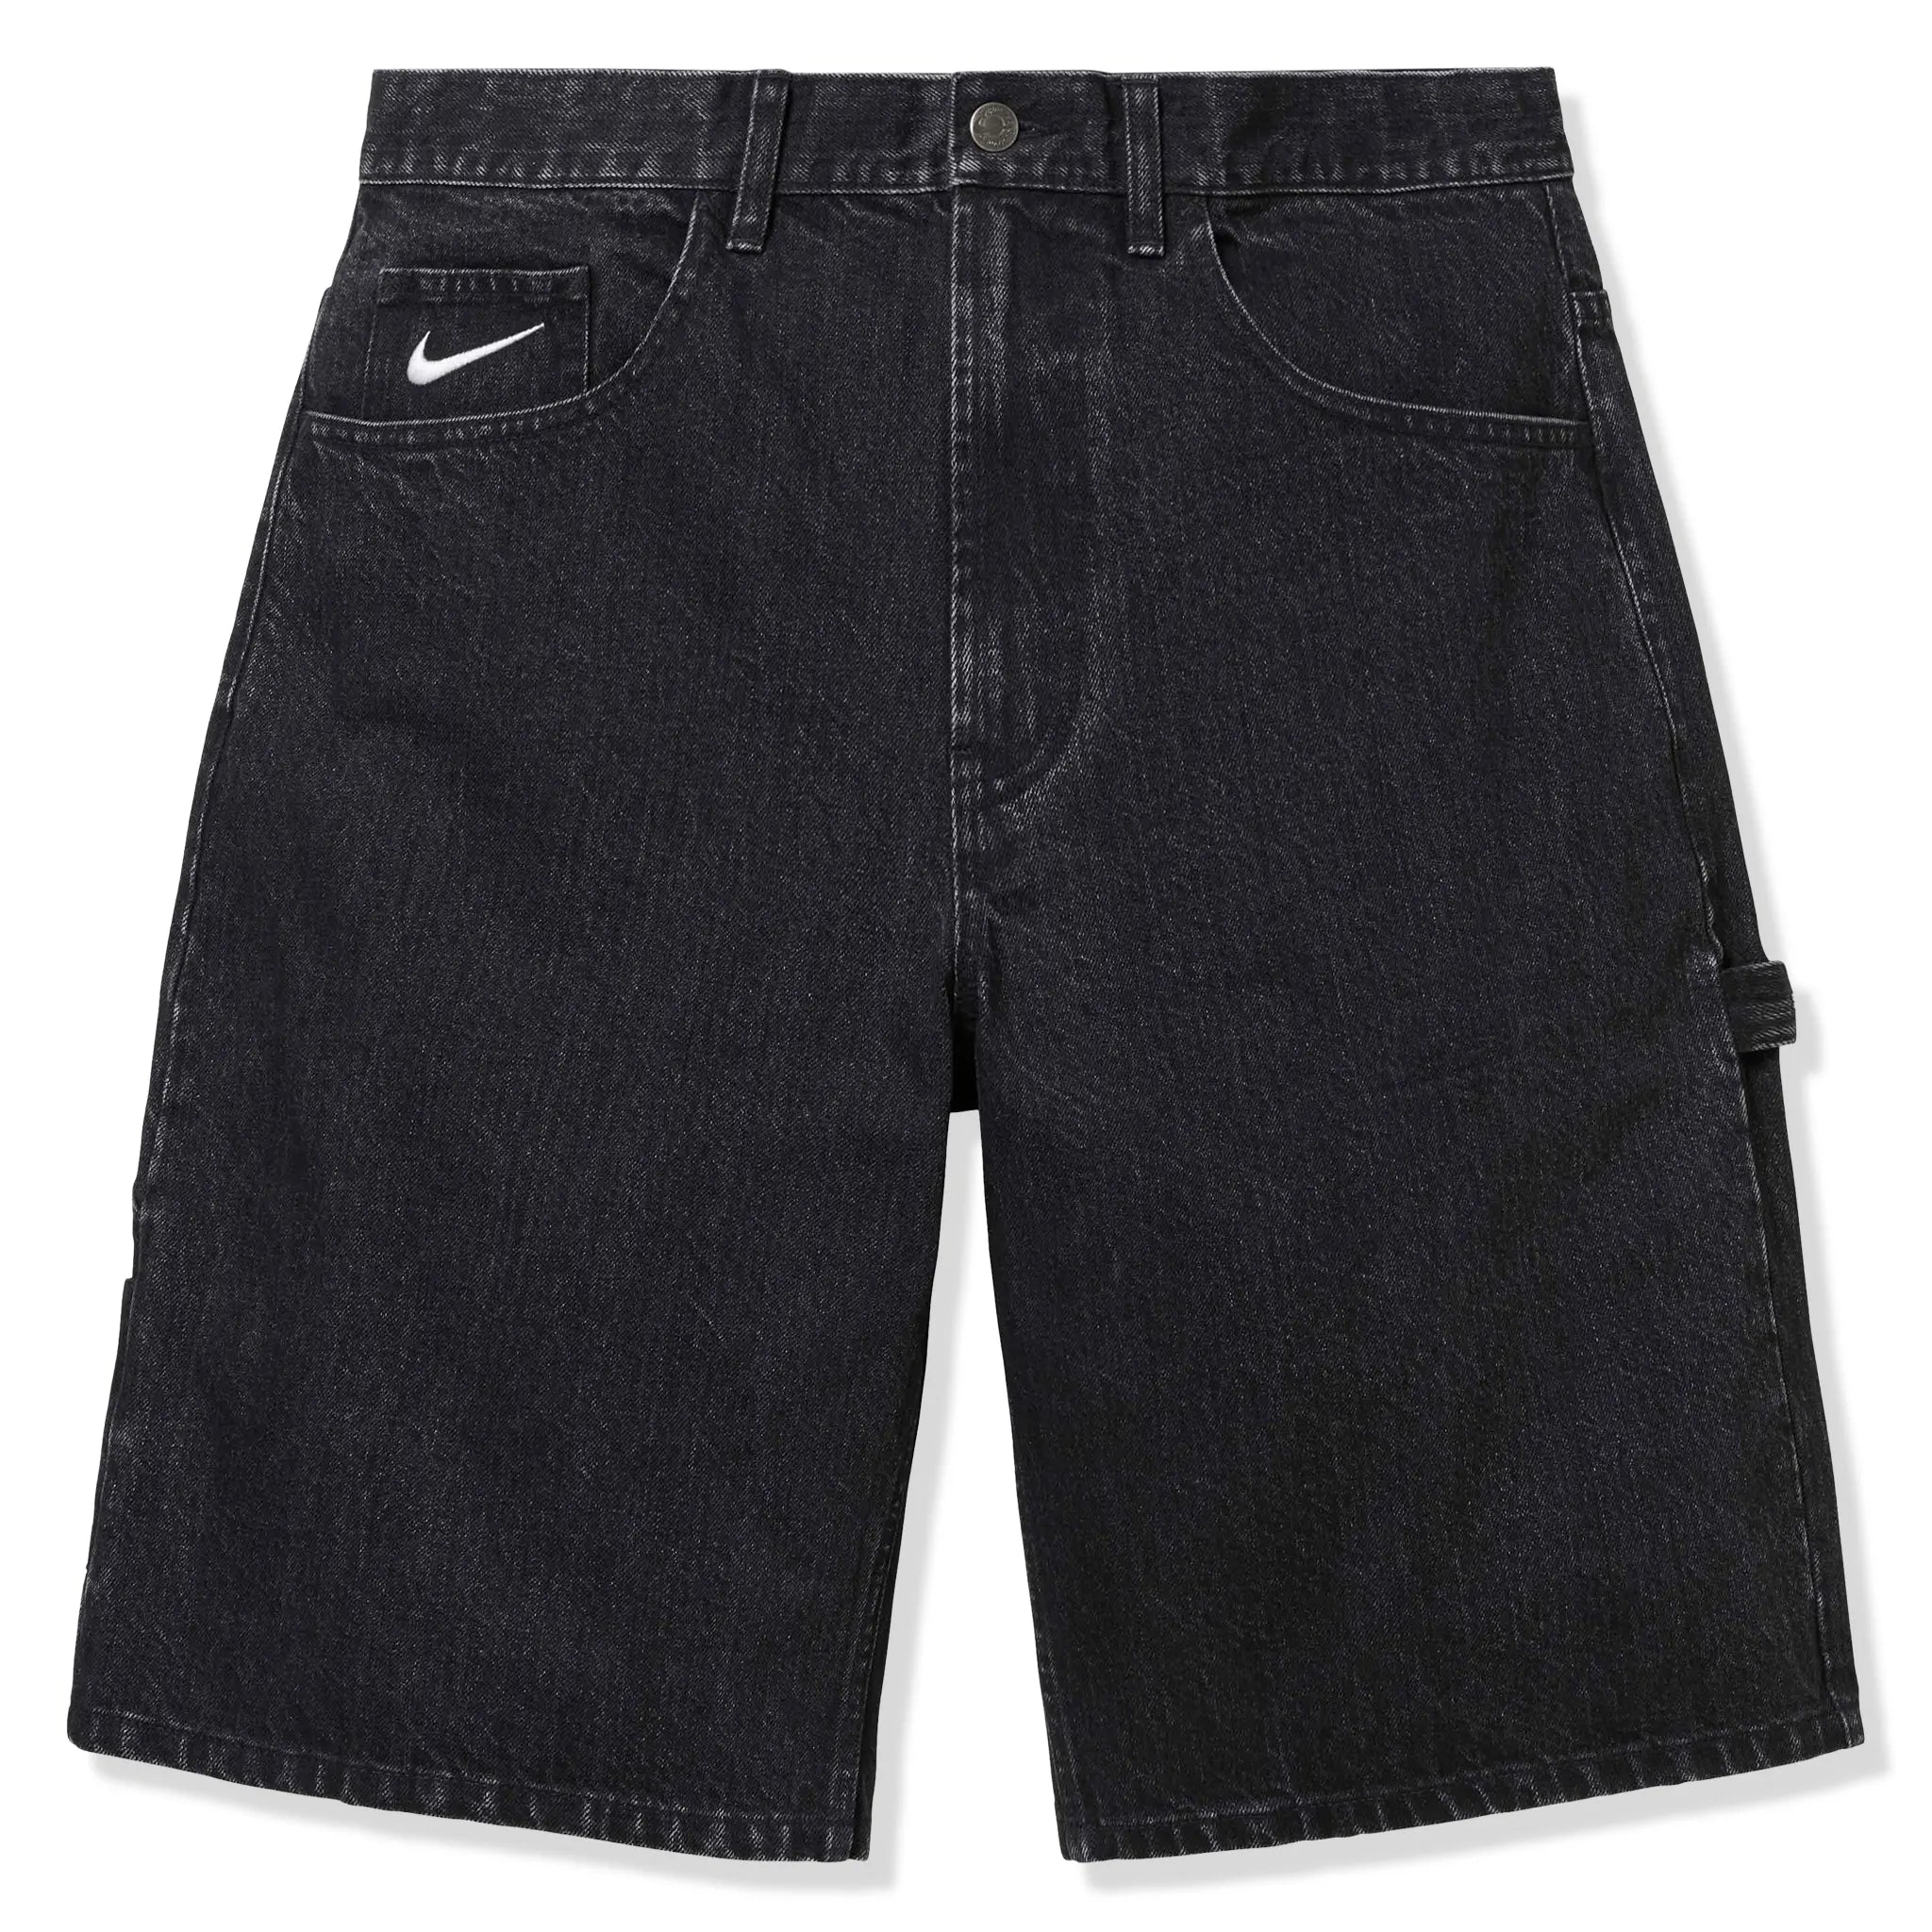 Front view of Nike Supreme Denim Black Shorts